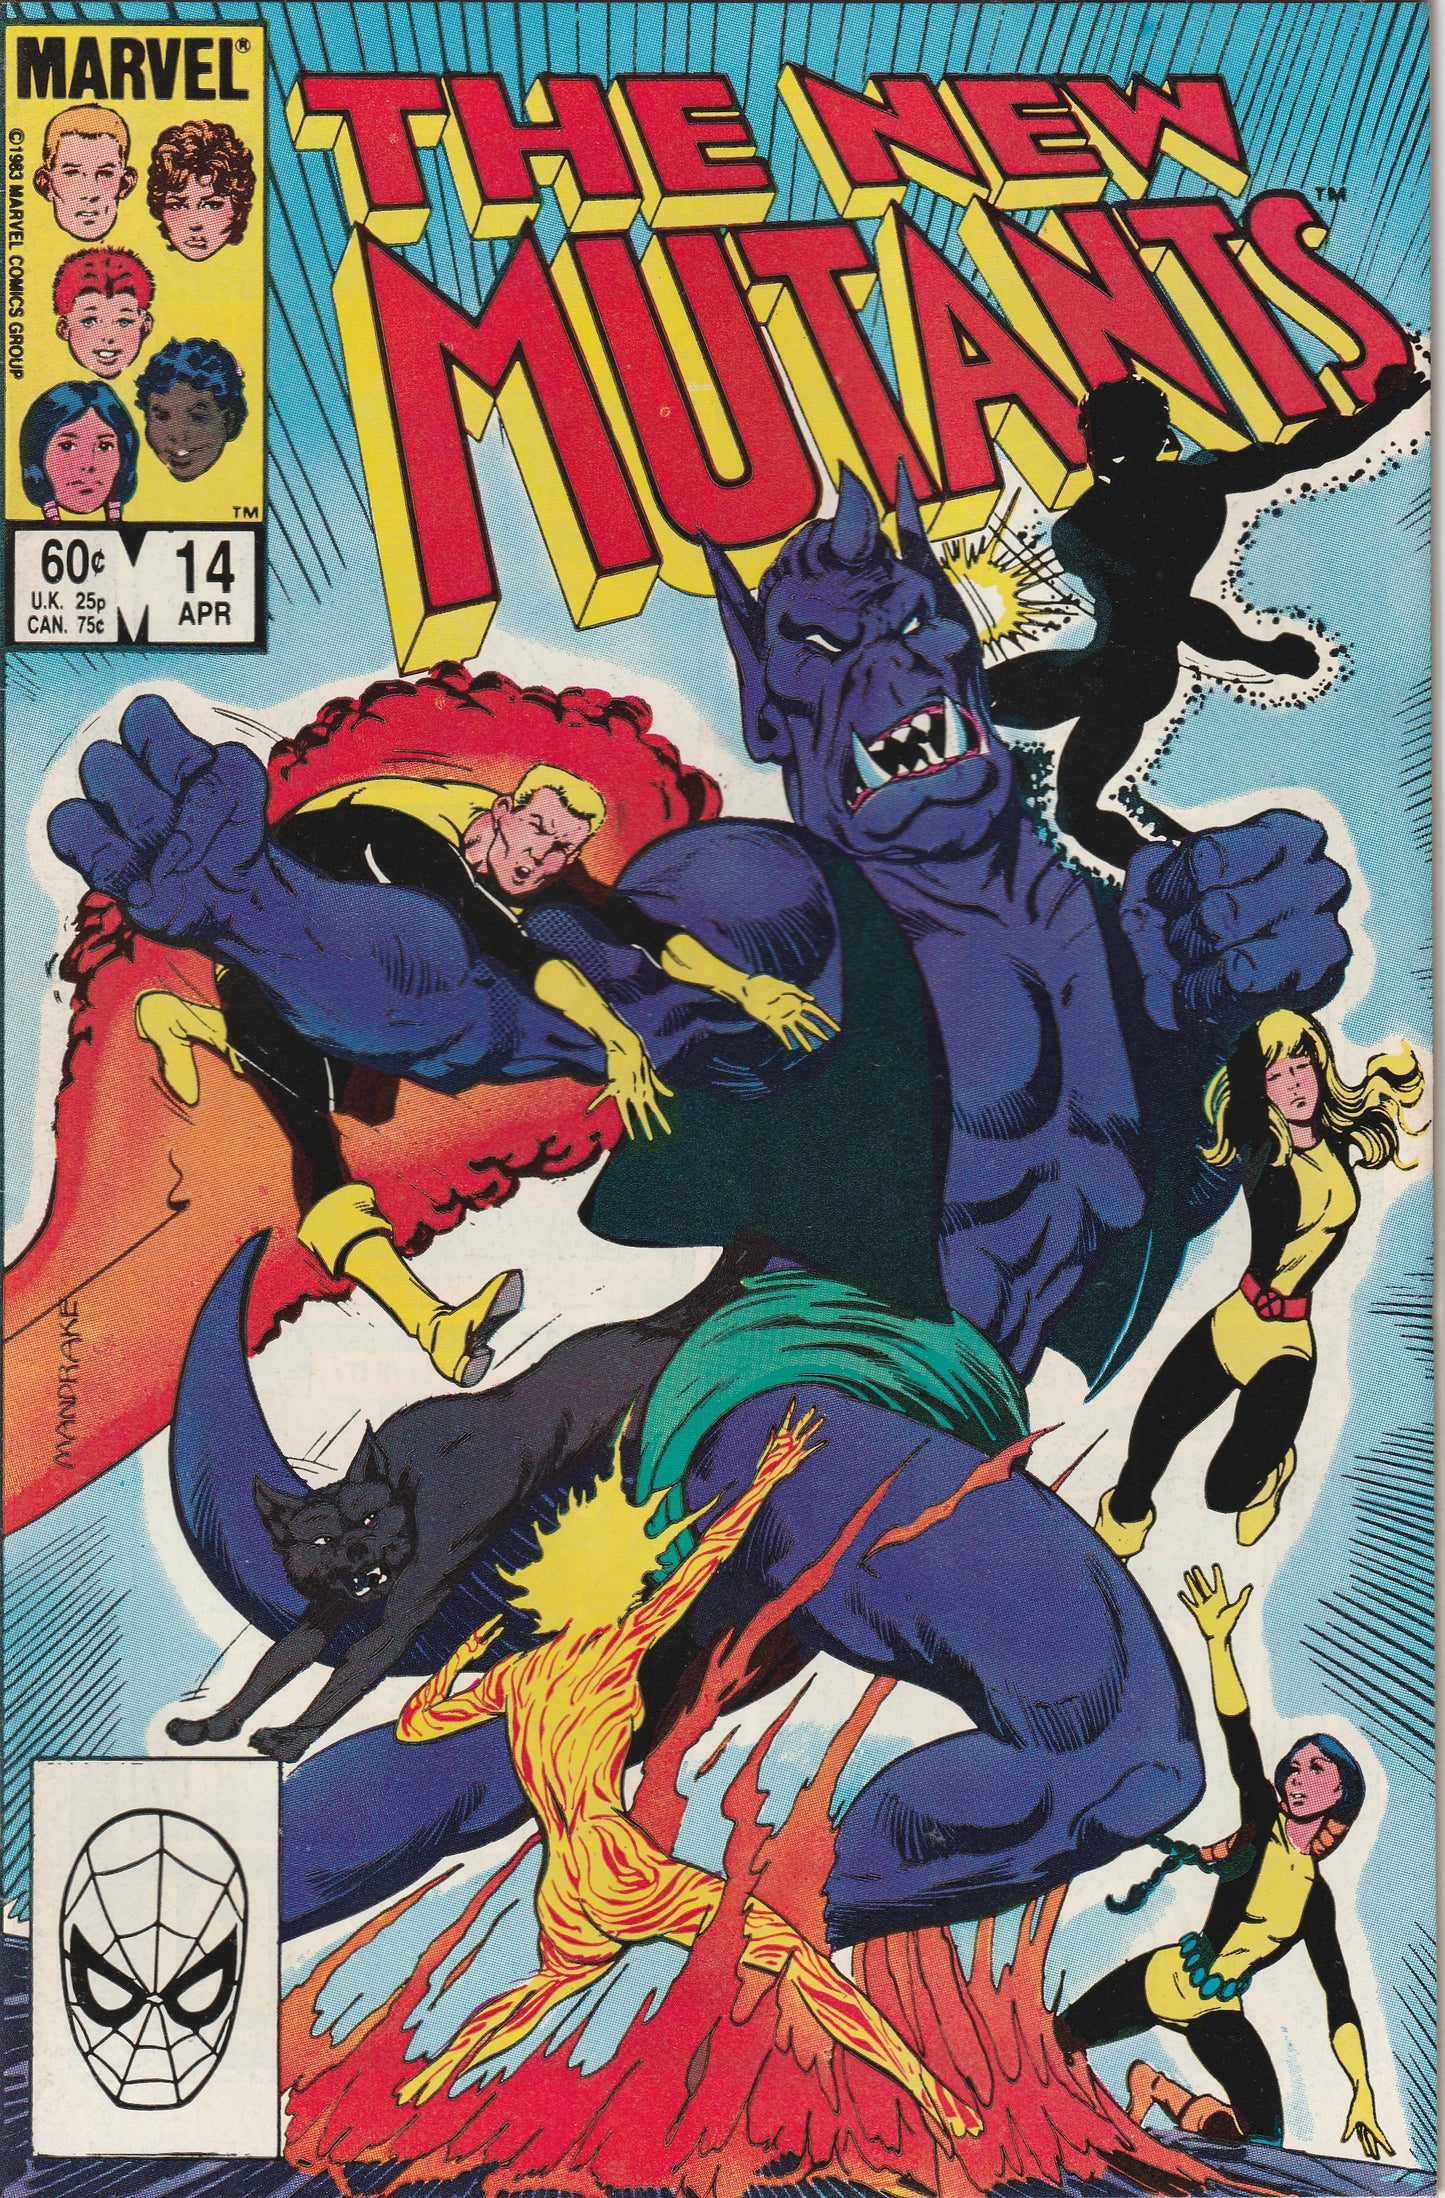 New Mutants #14 (1984) - 1st Appearance of Illyana Rasputin as Magik